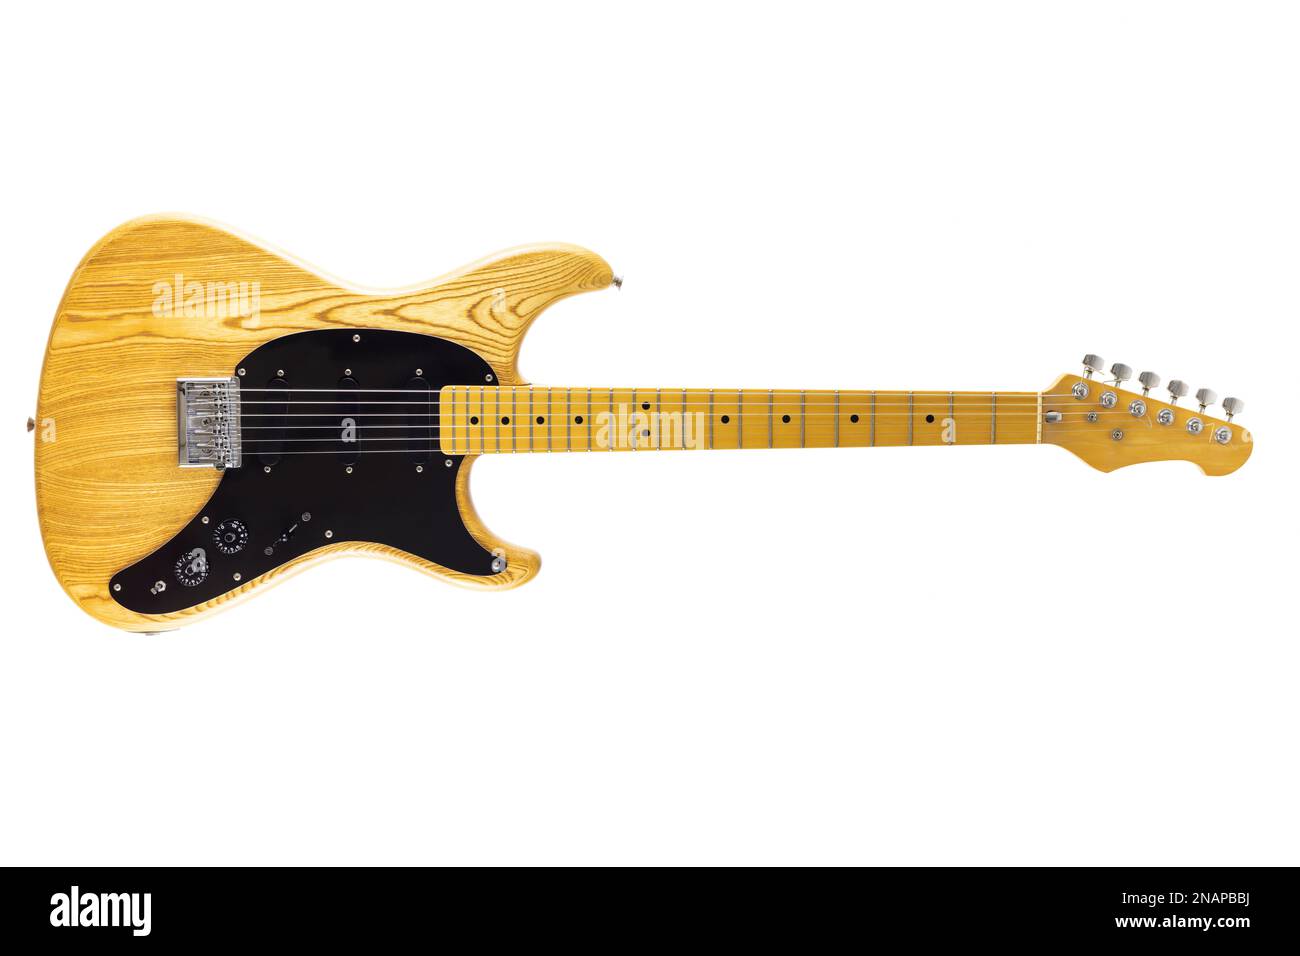 Chitarra elettrica chitarra elettrica chitarra ritagliata chitarra su sfondo bianco 1980 chitarra Vintage Ibanez blazer chitarra elettrica Foto Stock